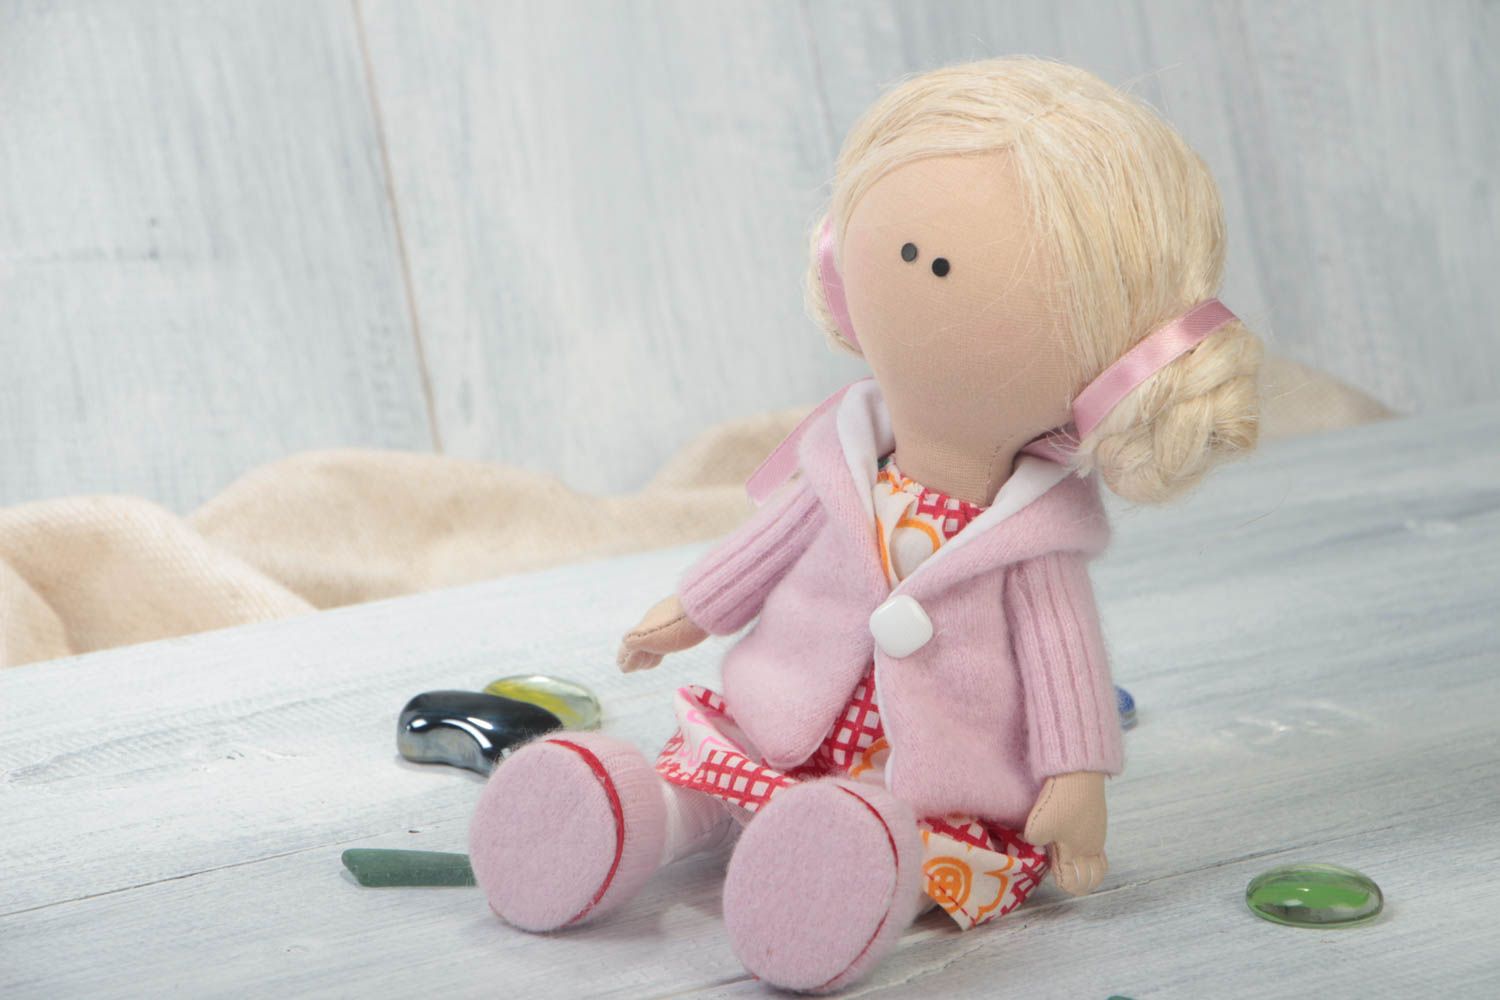 Handmade doll decorative doll nursery decor ideas unusual gift for children photo 1